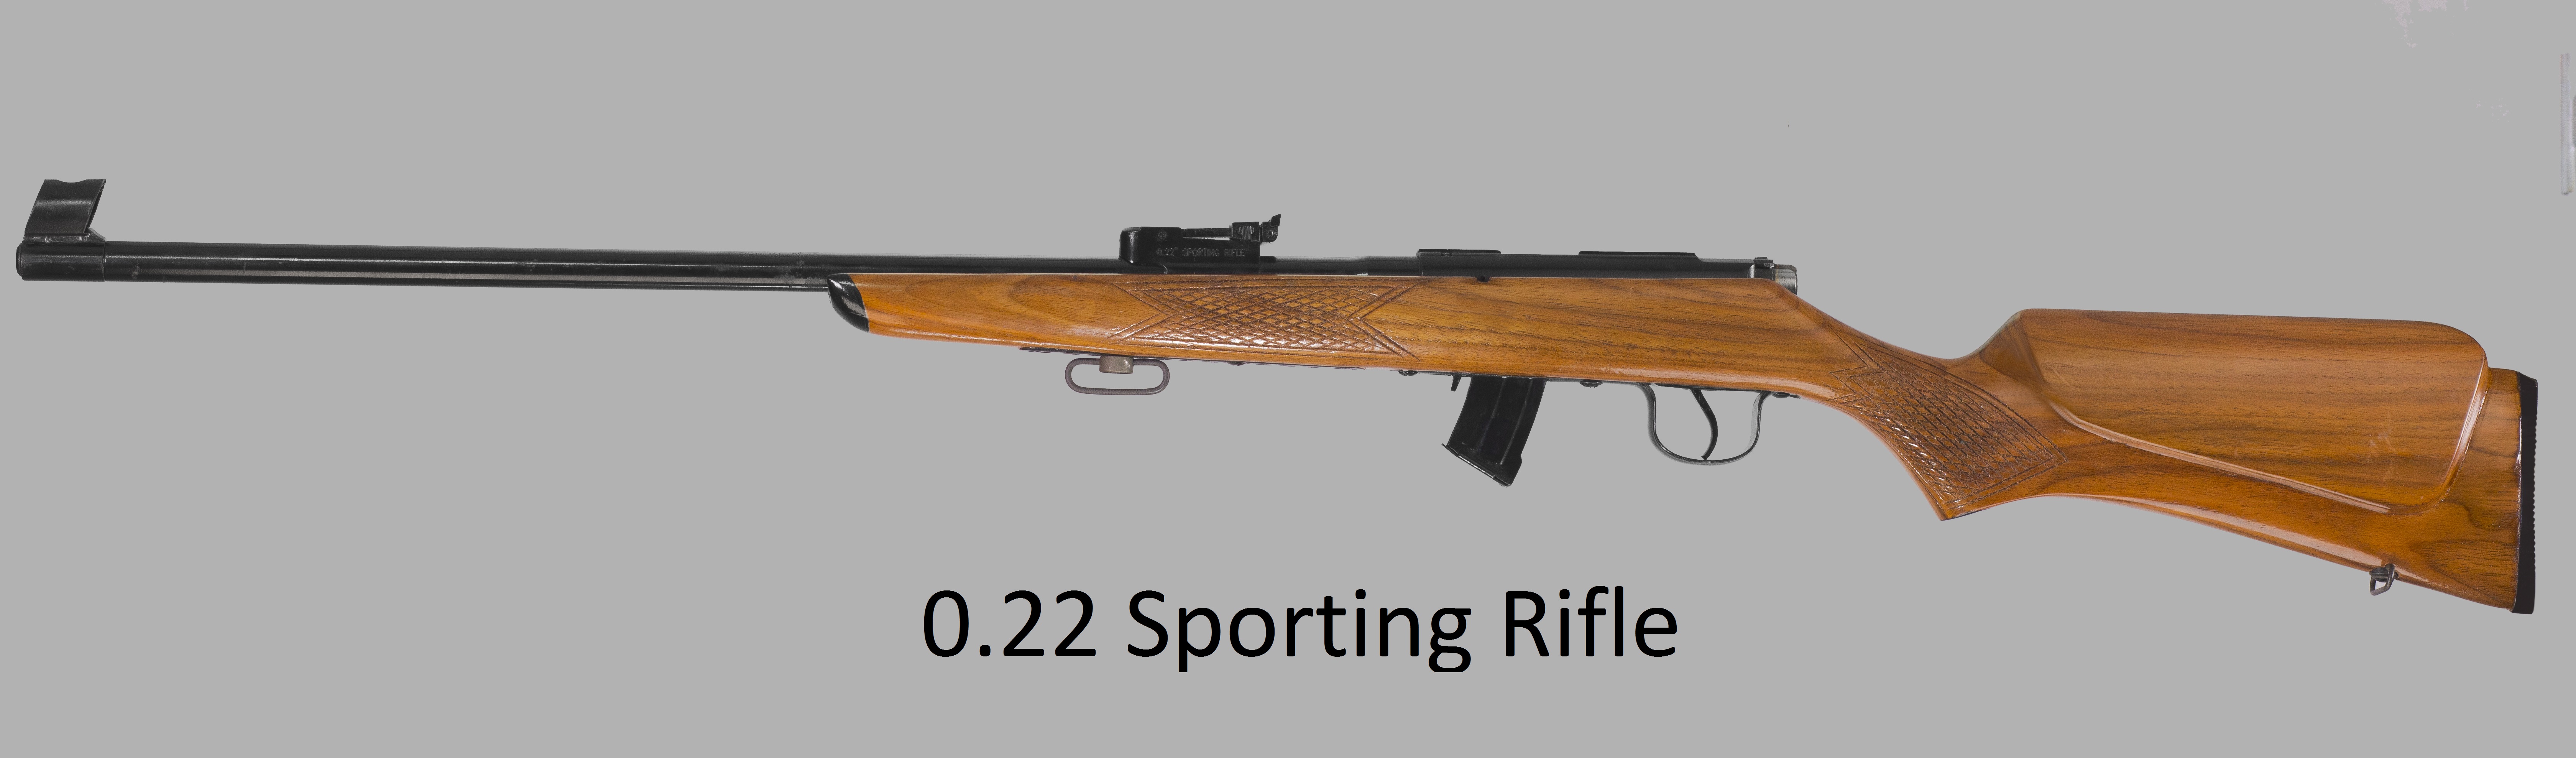 0.22 Sporting Rifle